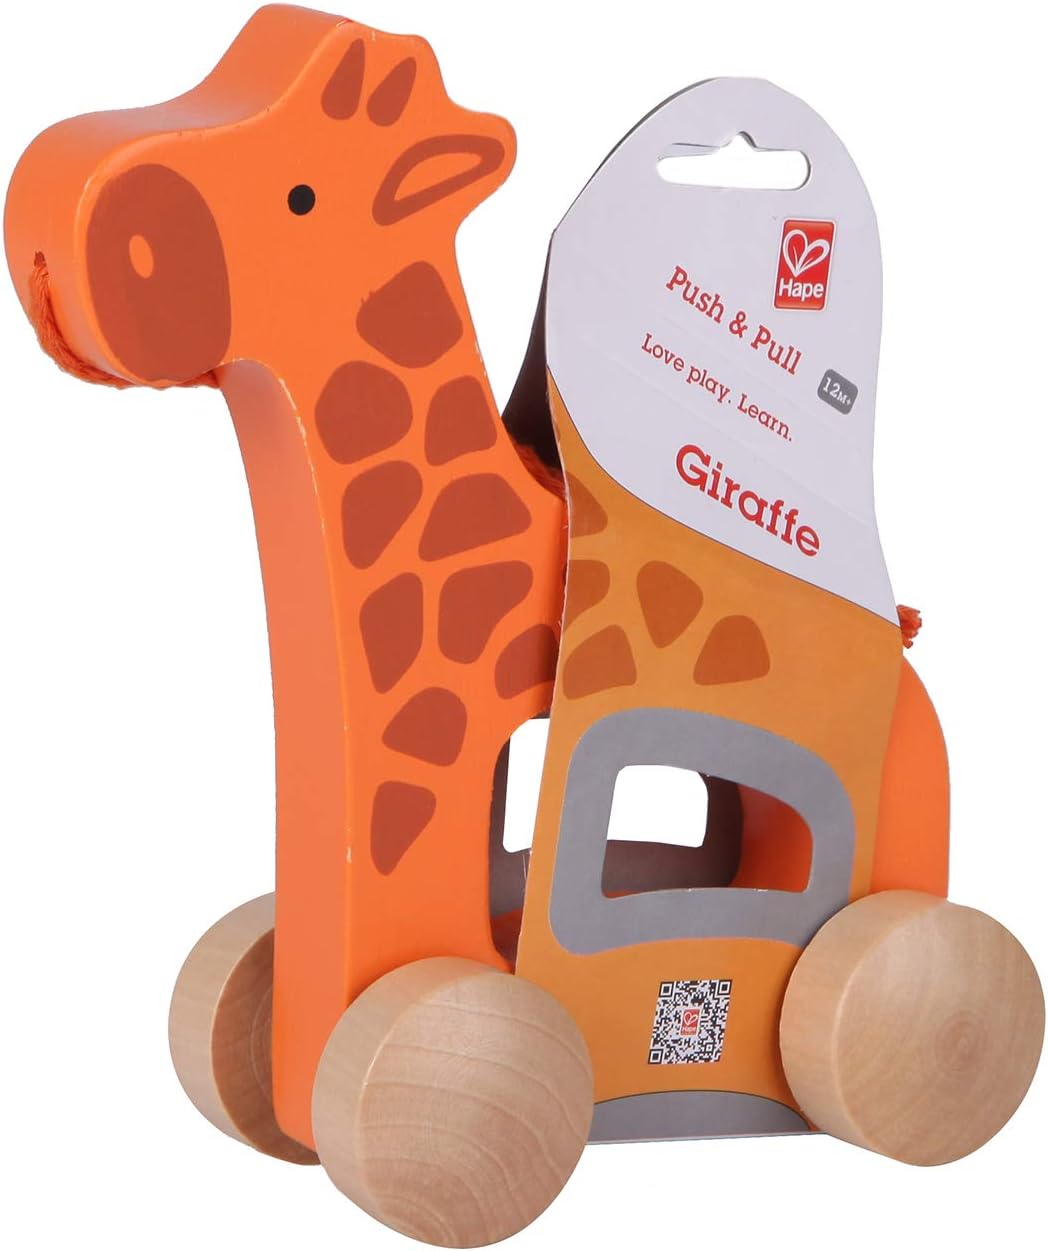 Hape E0906 Girafa - Brinquedo de madeira para empurrar e puxar - Por 12 meses +